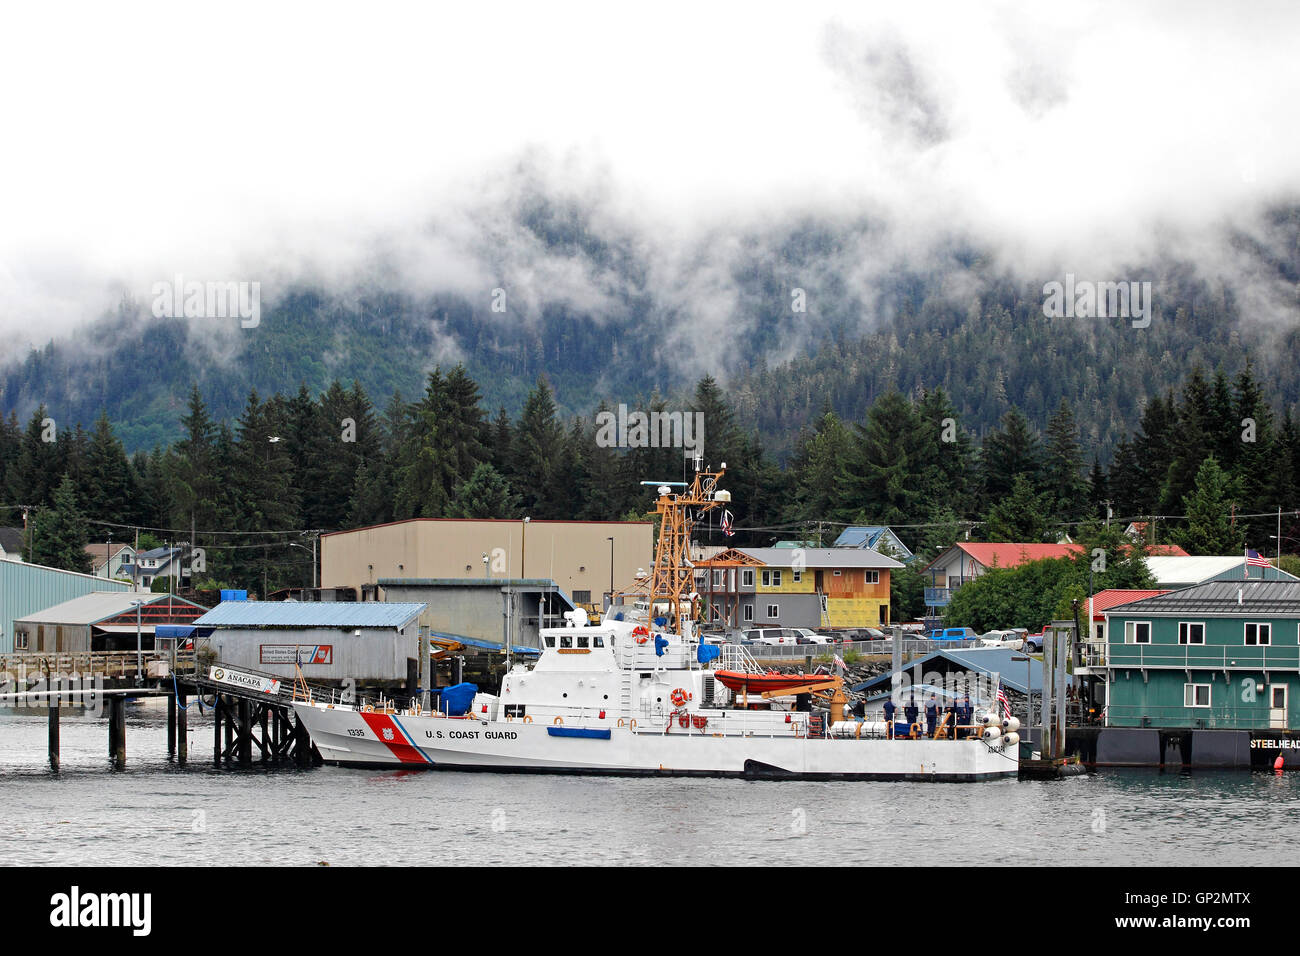 U.S. Coast Guard cutter 'Anacapa' boats Petersburg 'Little Norway' fishing village Mitkof Island Inside Passage Southeast Alaska Stock Photo